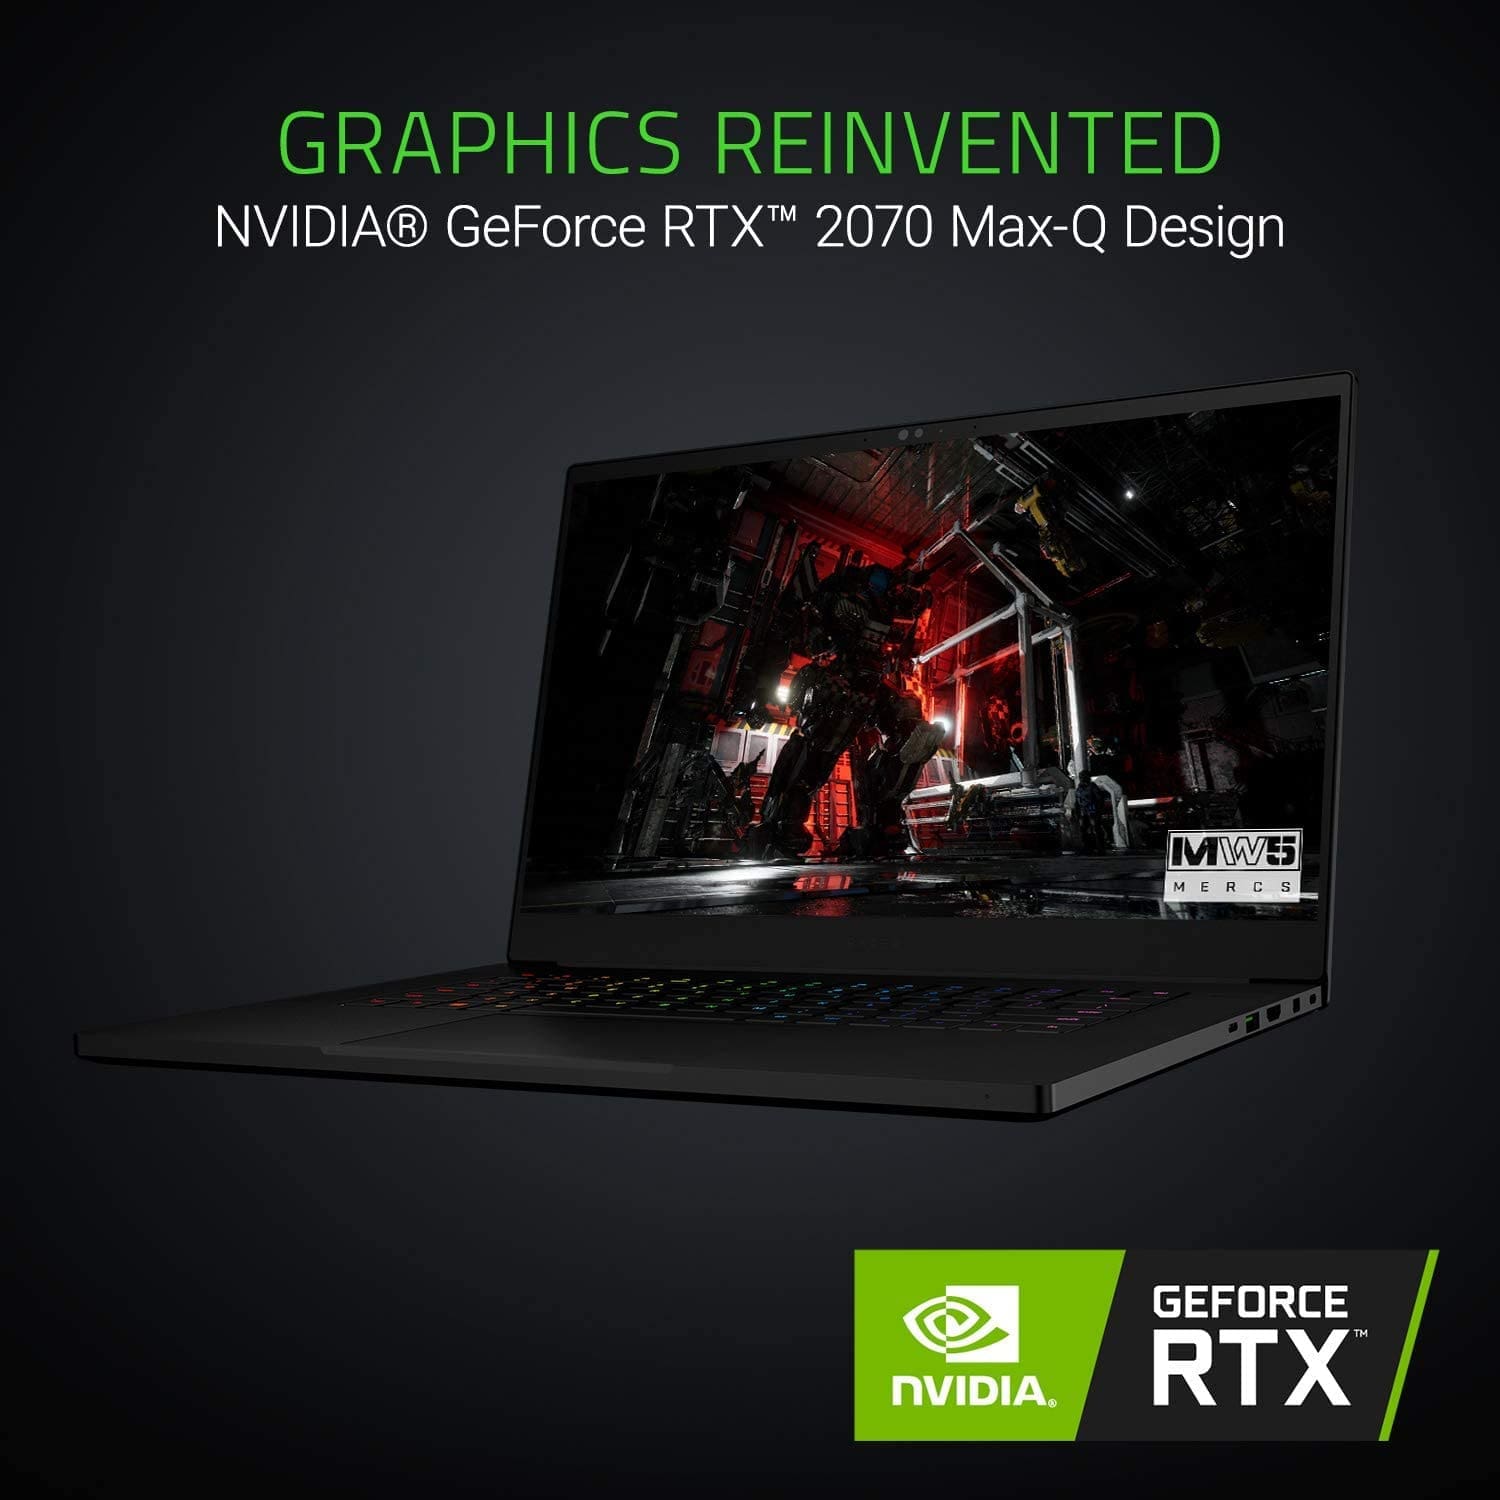 Razer Blade 15 gaming laptop: intel core i7-8750H six-core, Nvidia graphics